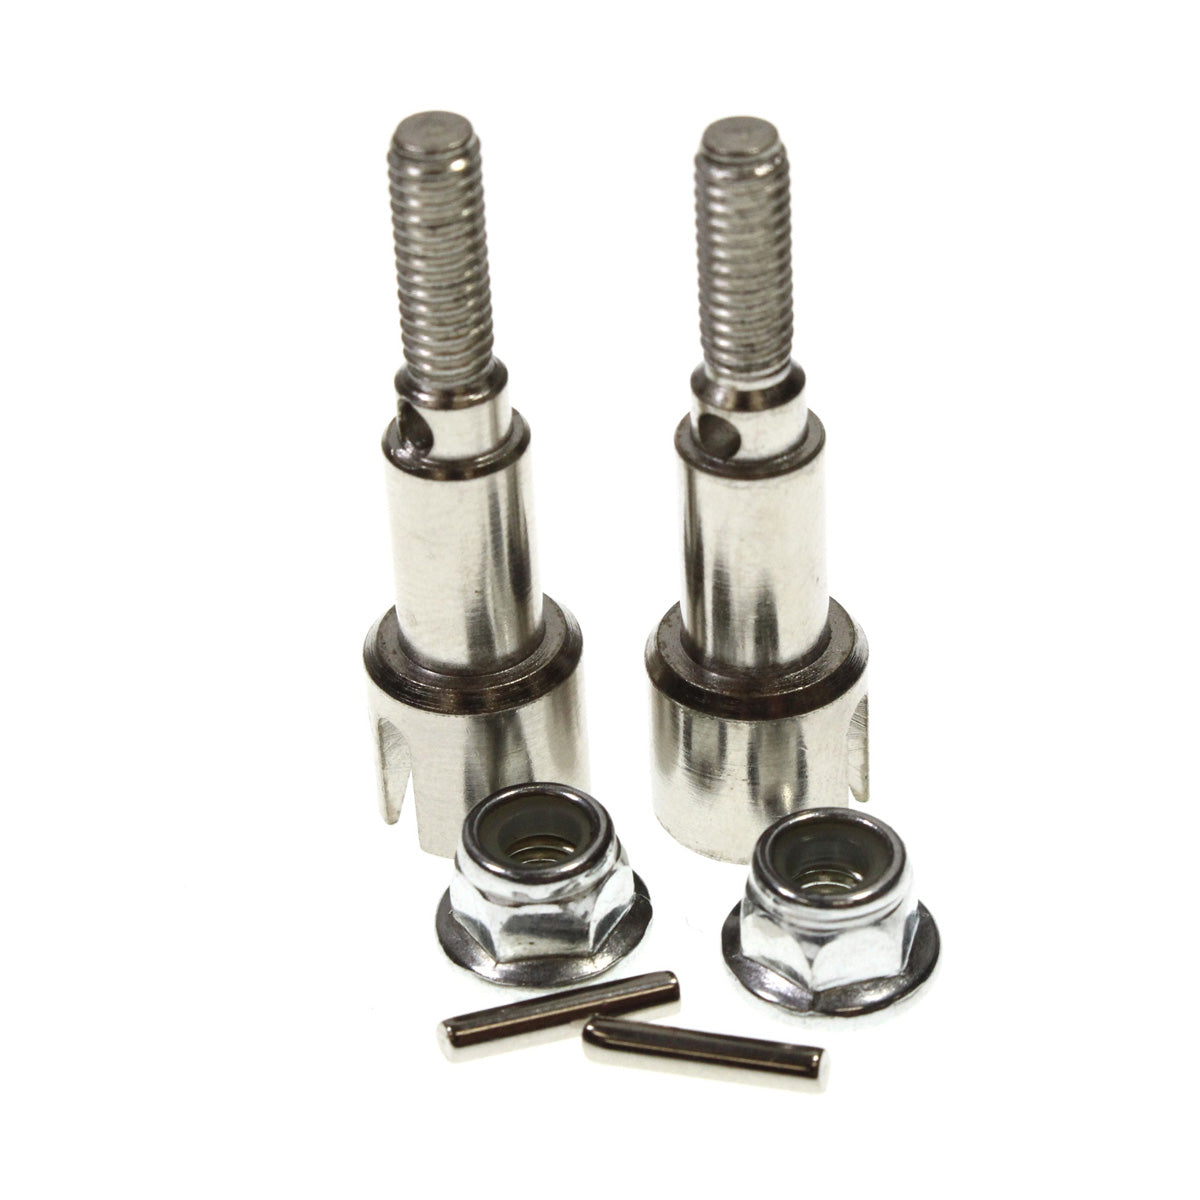 Metal Rear Wheel Shafts & Pins & M4 Lock Nuts for Blackzon Slyder